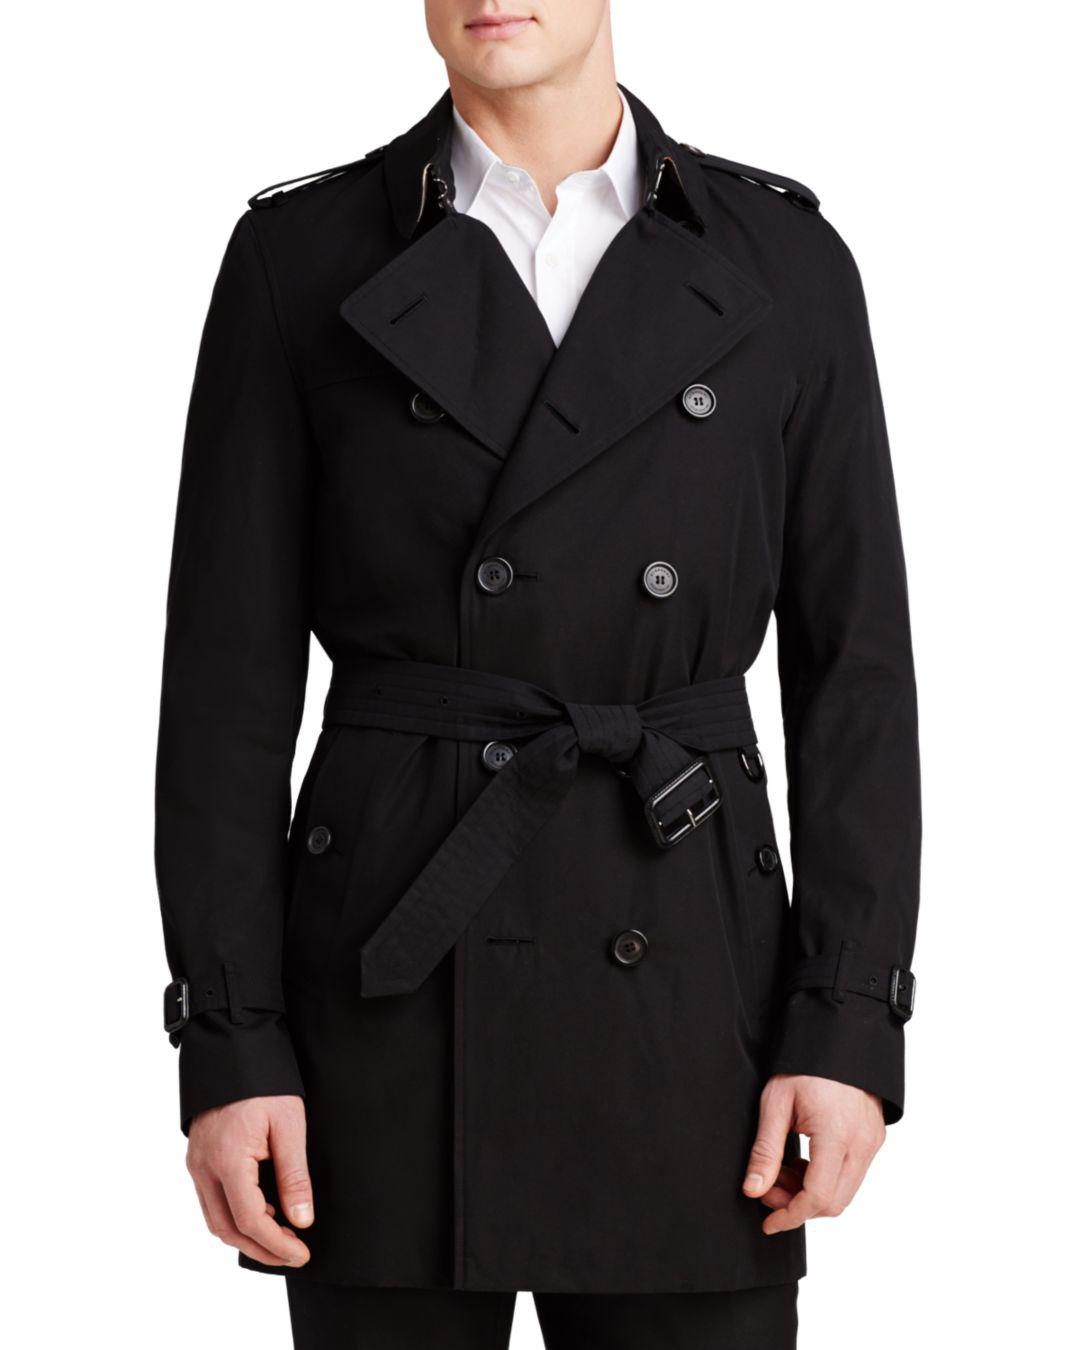 Lyst - Burberry Heritage Kensington Mid-length Trench Coat in Black for Men